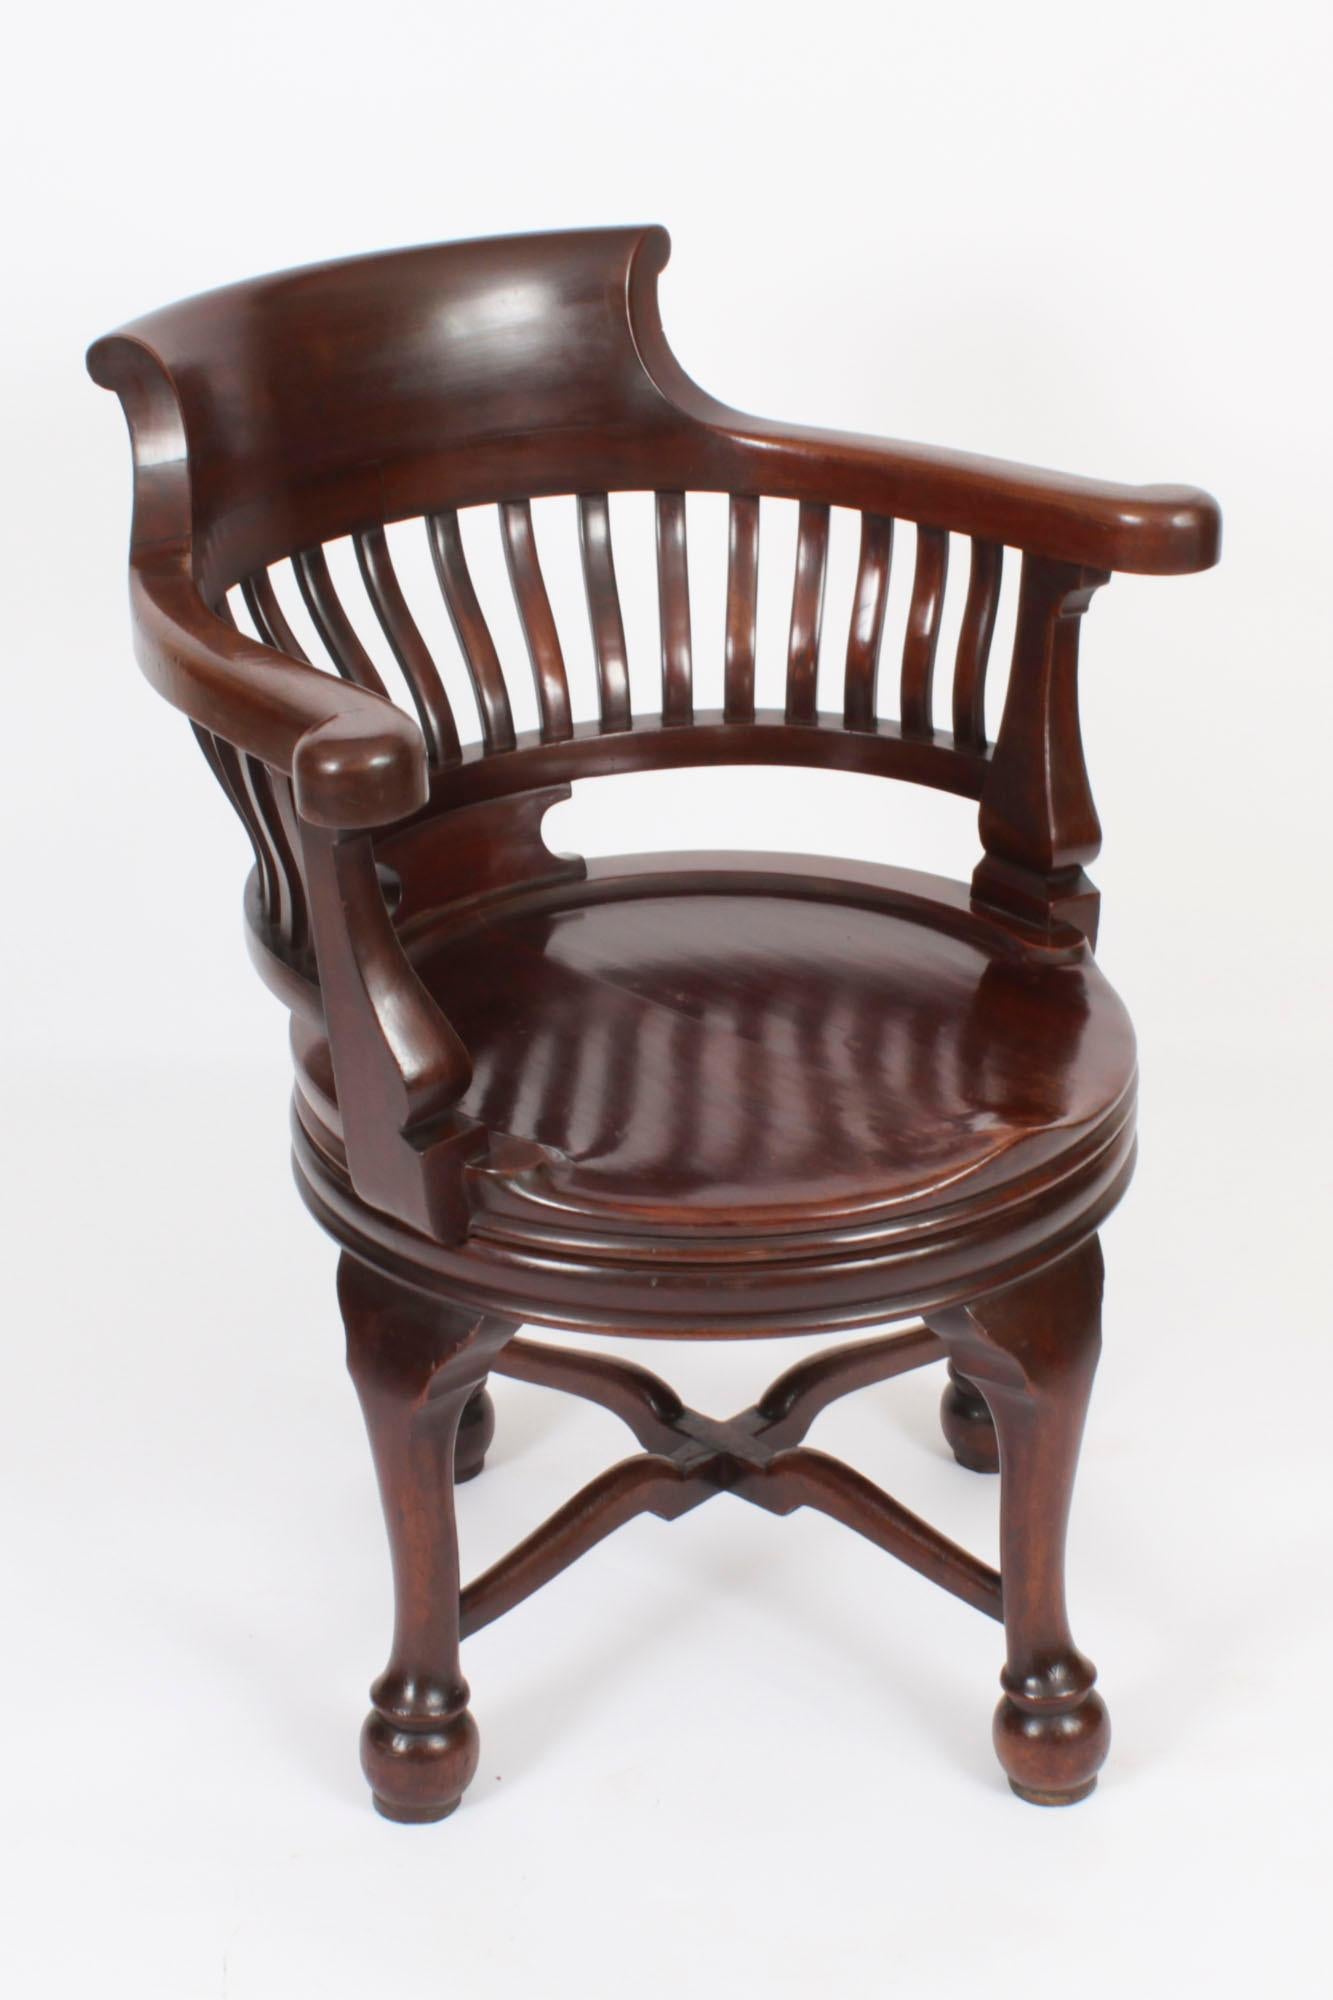 Antique Victorian Walnut Revolving Desk Chair c.1880 19th Century For Sale 8